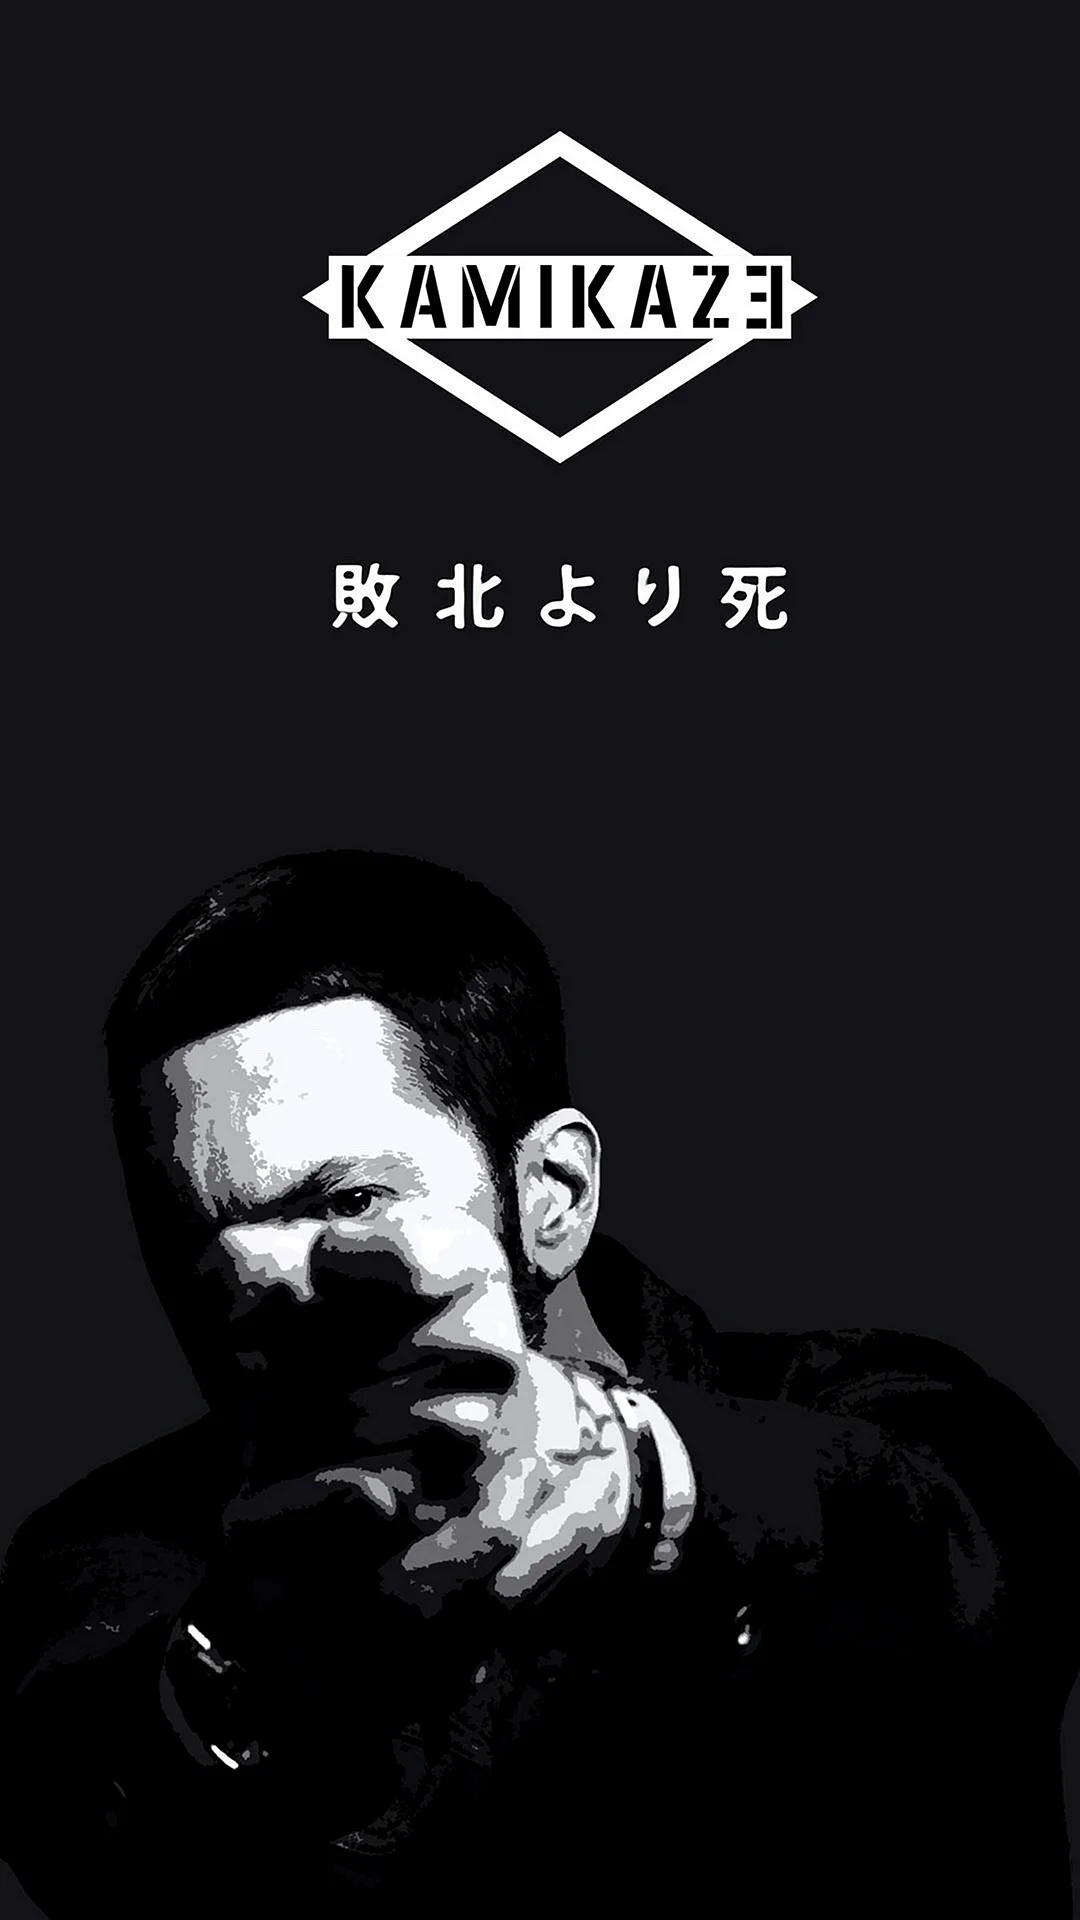 Eminem Kamikaze Wallpaper For iPhone